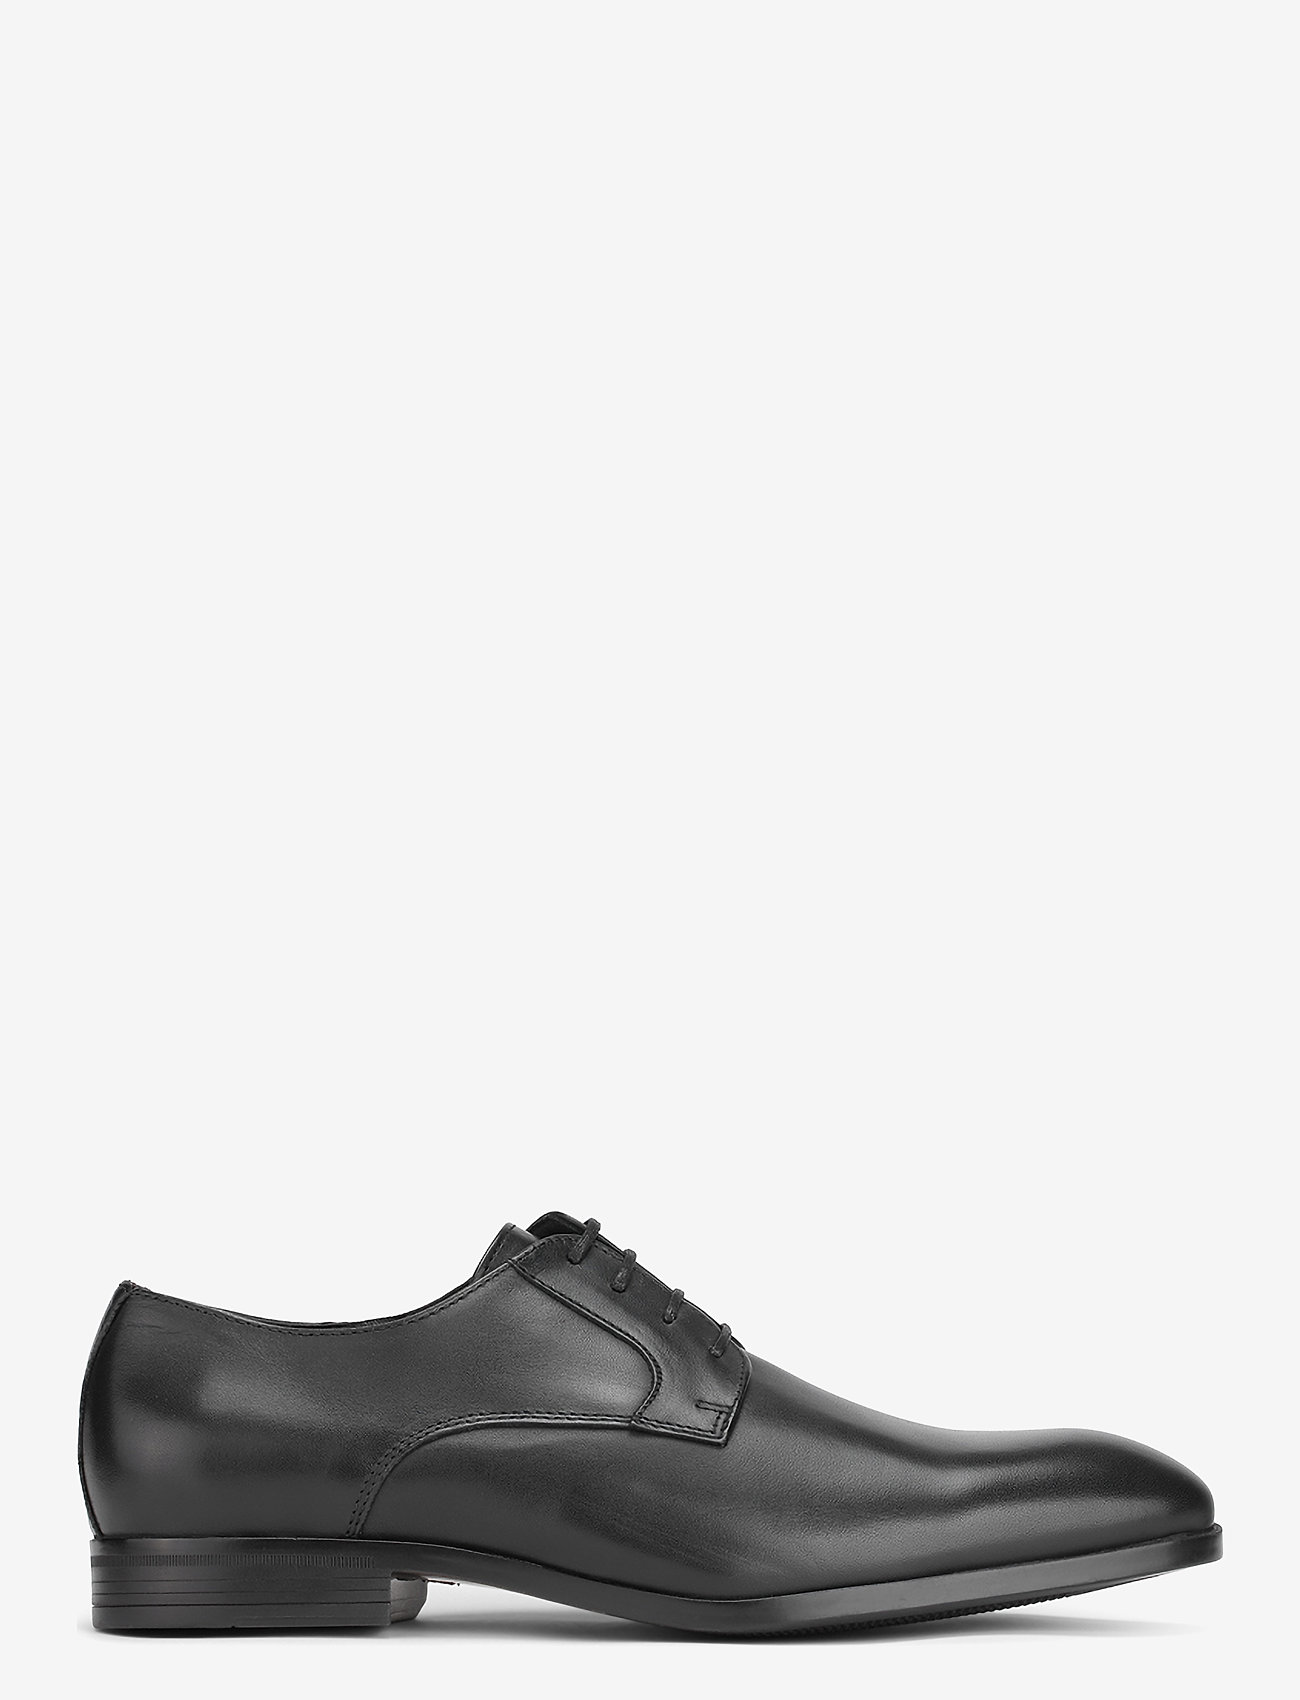 Playboy Footwear - PB10048 - nauhakengät - black leather - 1